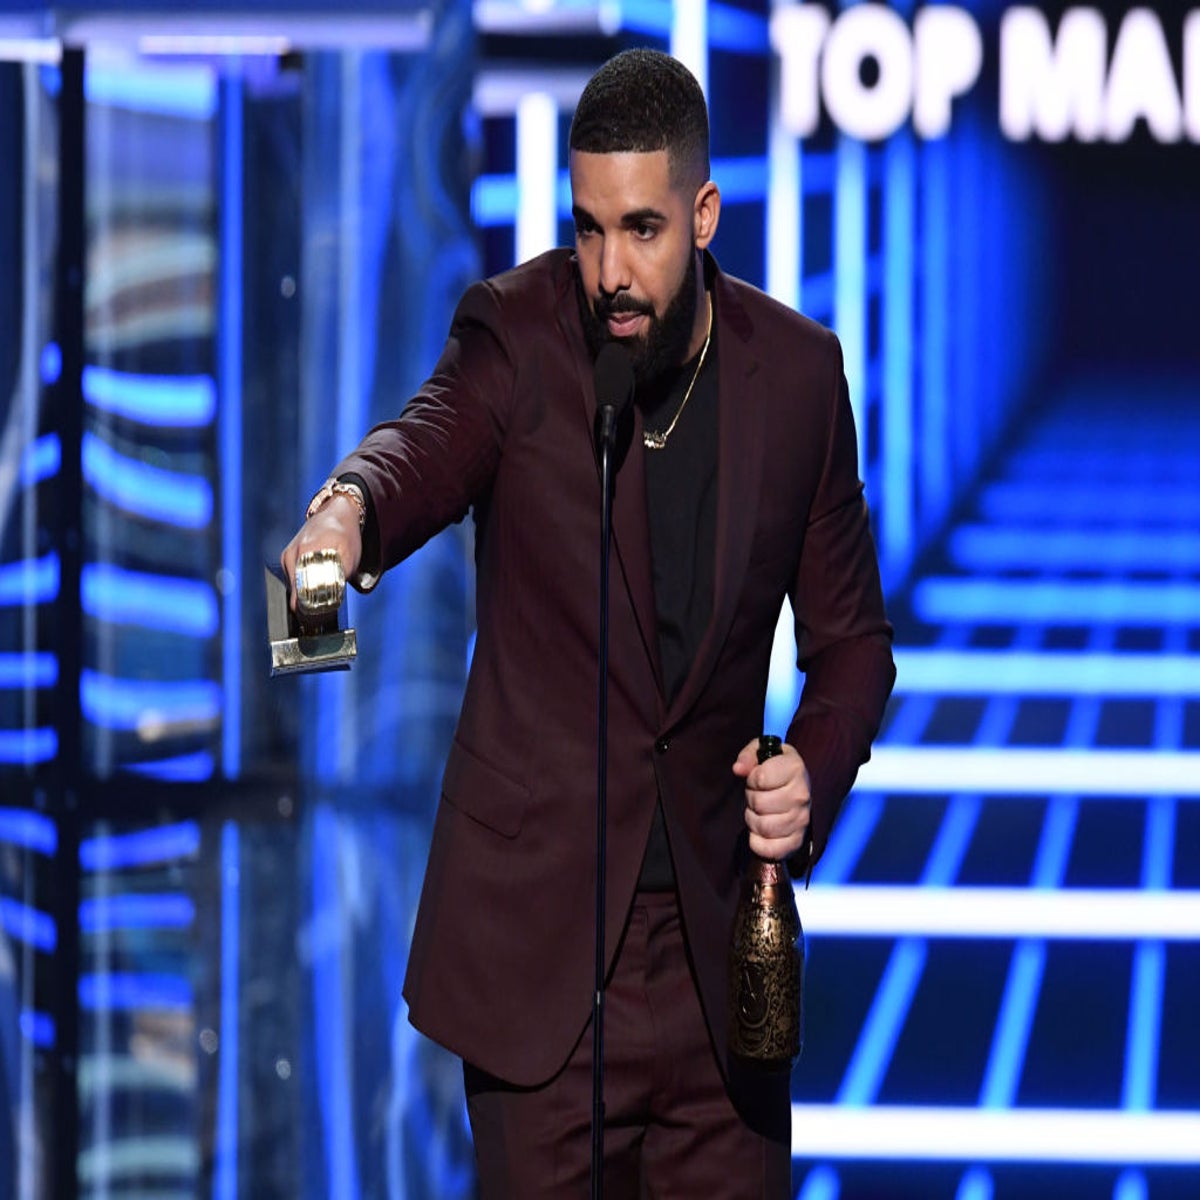 Billboard Music Awards winners in full: Drake reigns supreme while